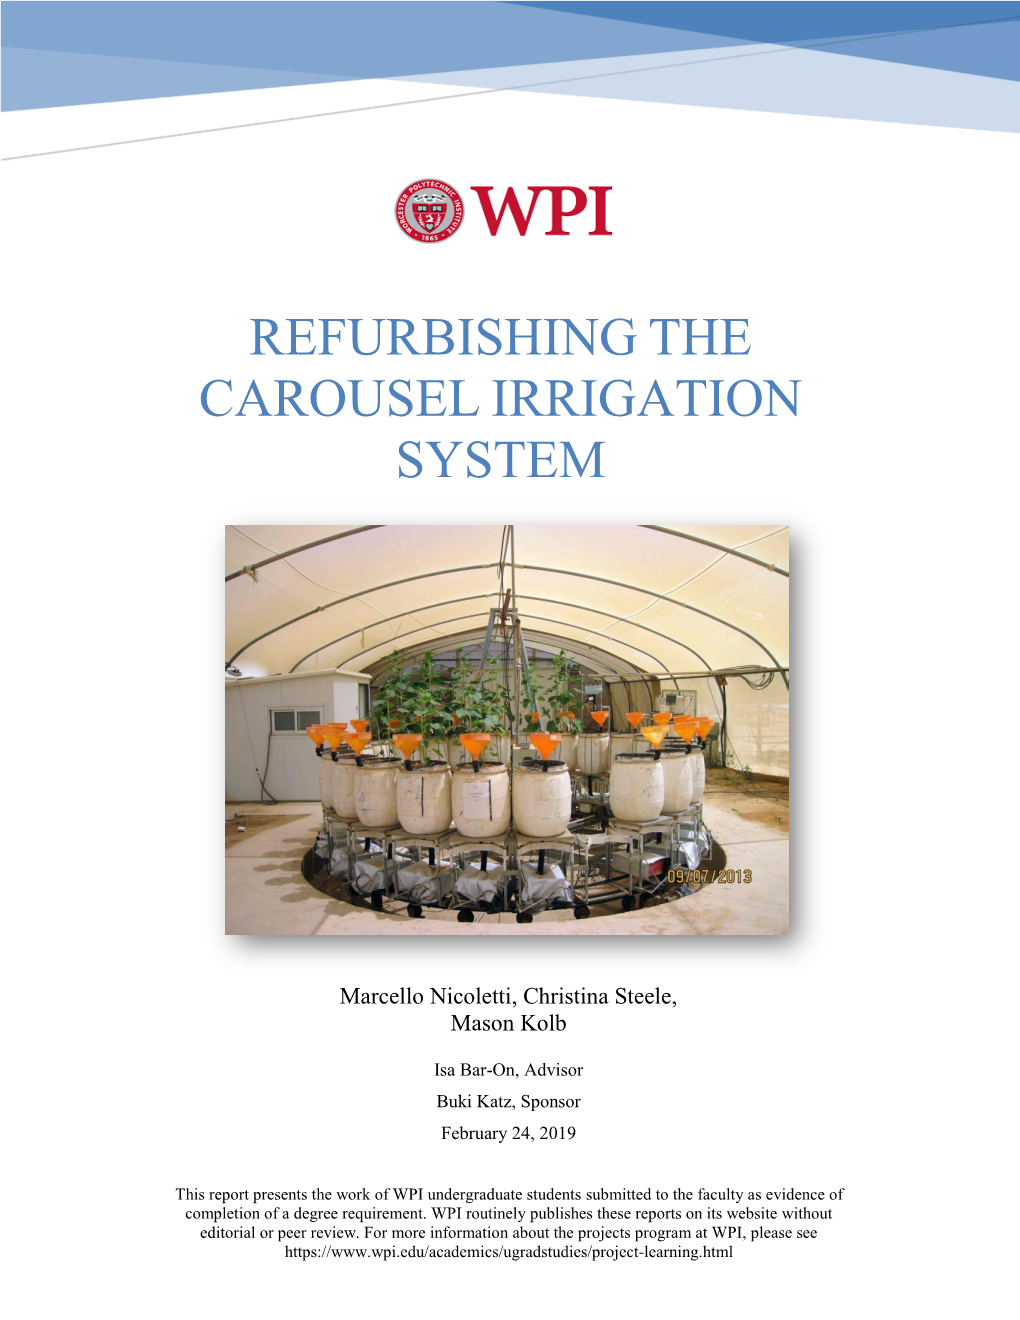 Refurbishing the Carousel Irrigation System